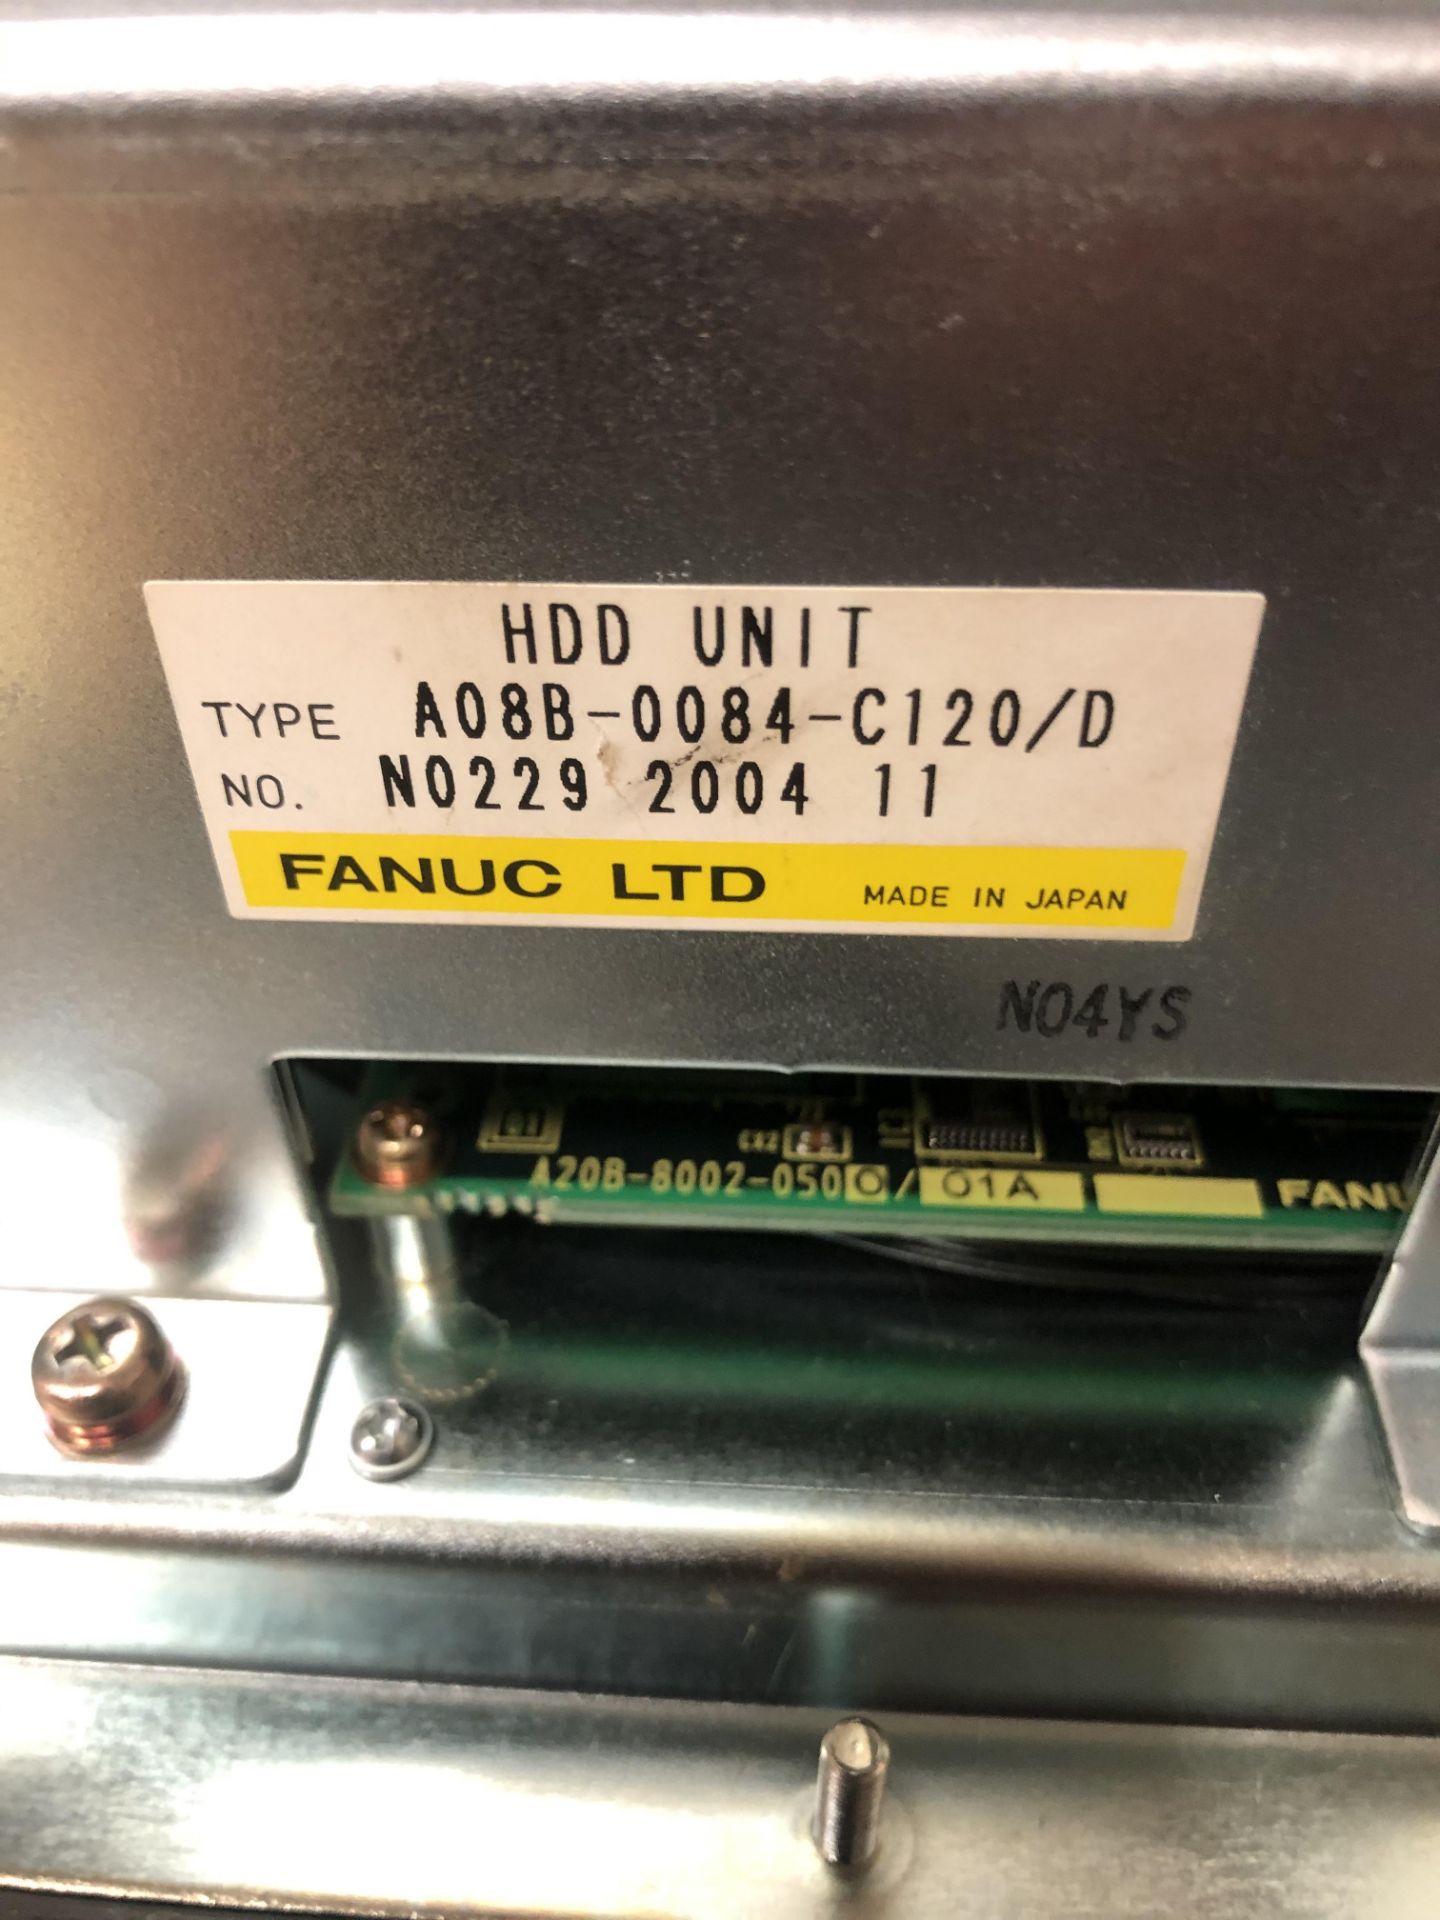 FANUC A13B-0196-B412 PANEL W/ A08B-0084-D432 BASE UNIT & A08B-0084-C120/D HDD UNIT - Image 4 of 6